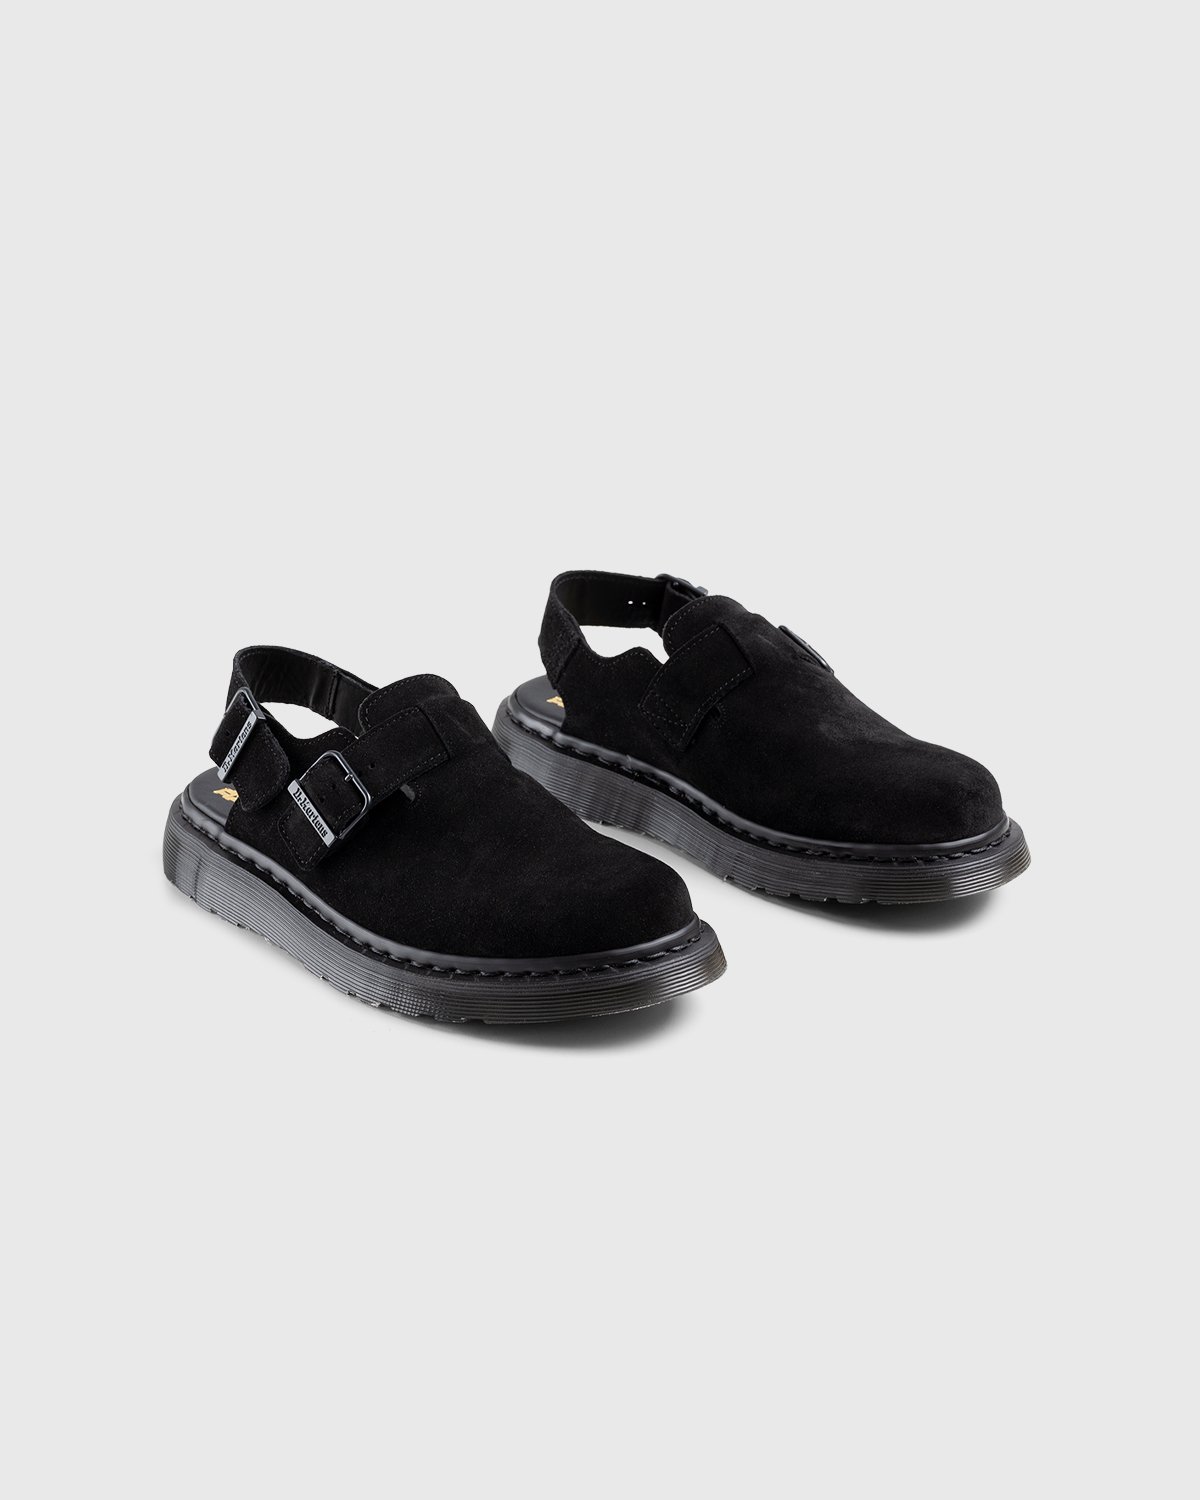 Dr. Martens - Jorge Black Repello Calf Suede - Footwear - Black - Image 3